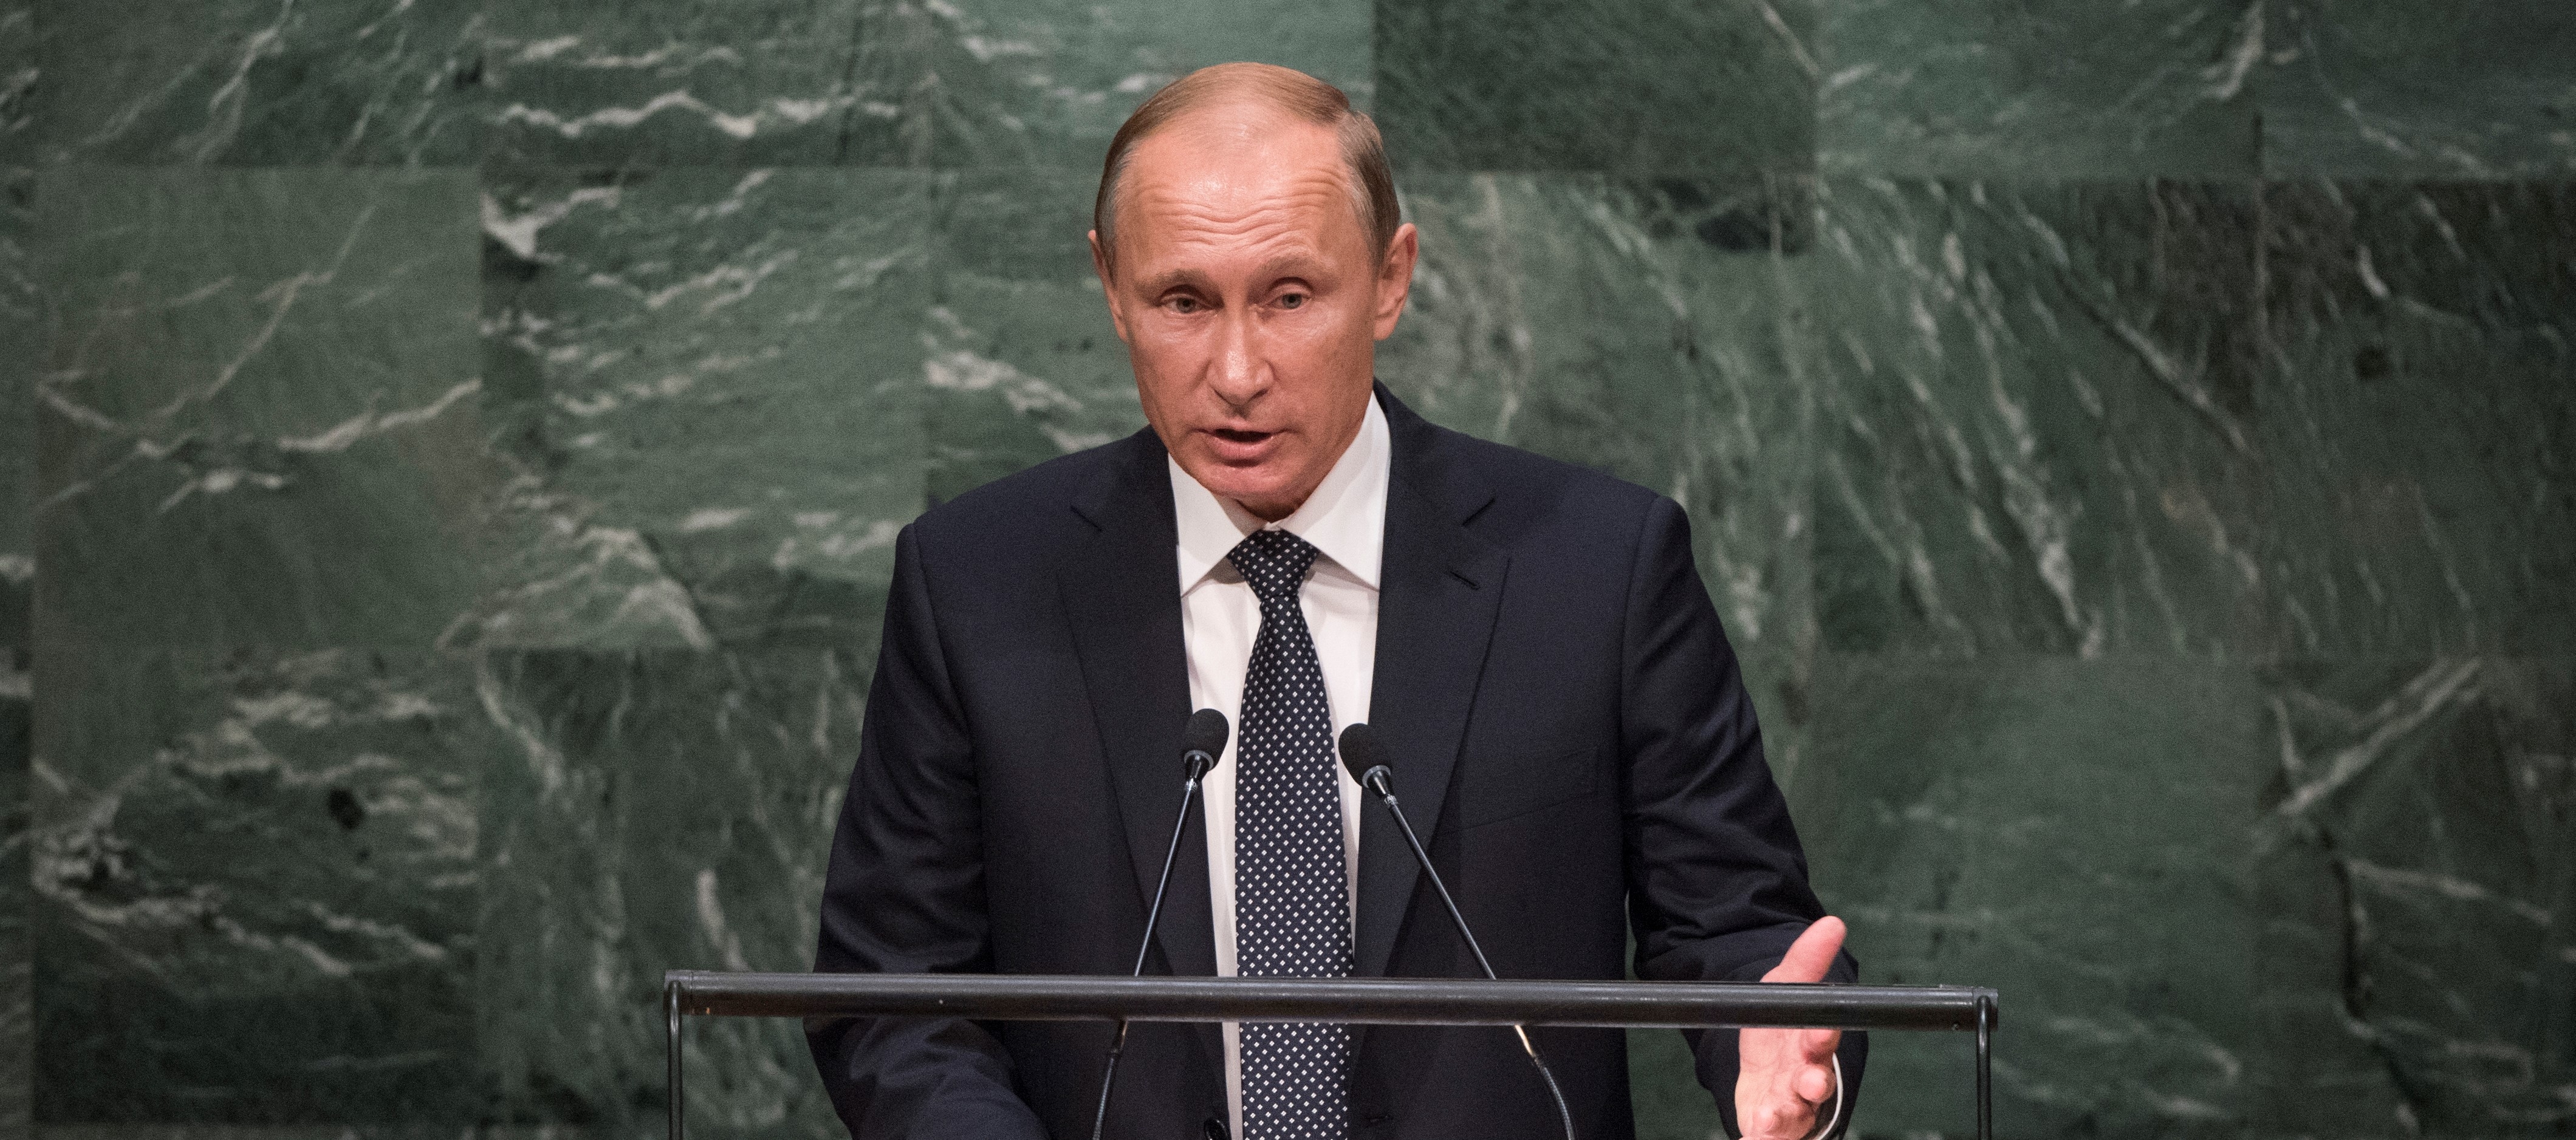 Russlands president, Vladimir Putin, taler her i FNs generalforsamling i 2015. Foto: UN Photo/Cia Pak.